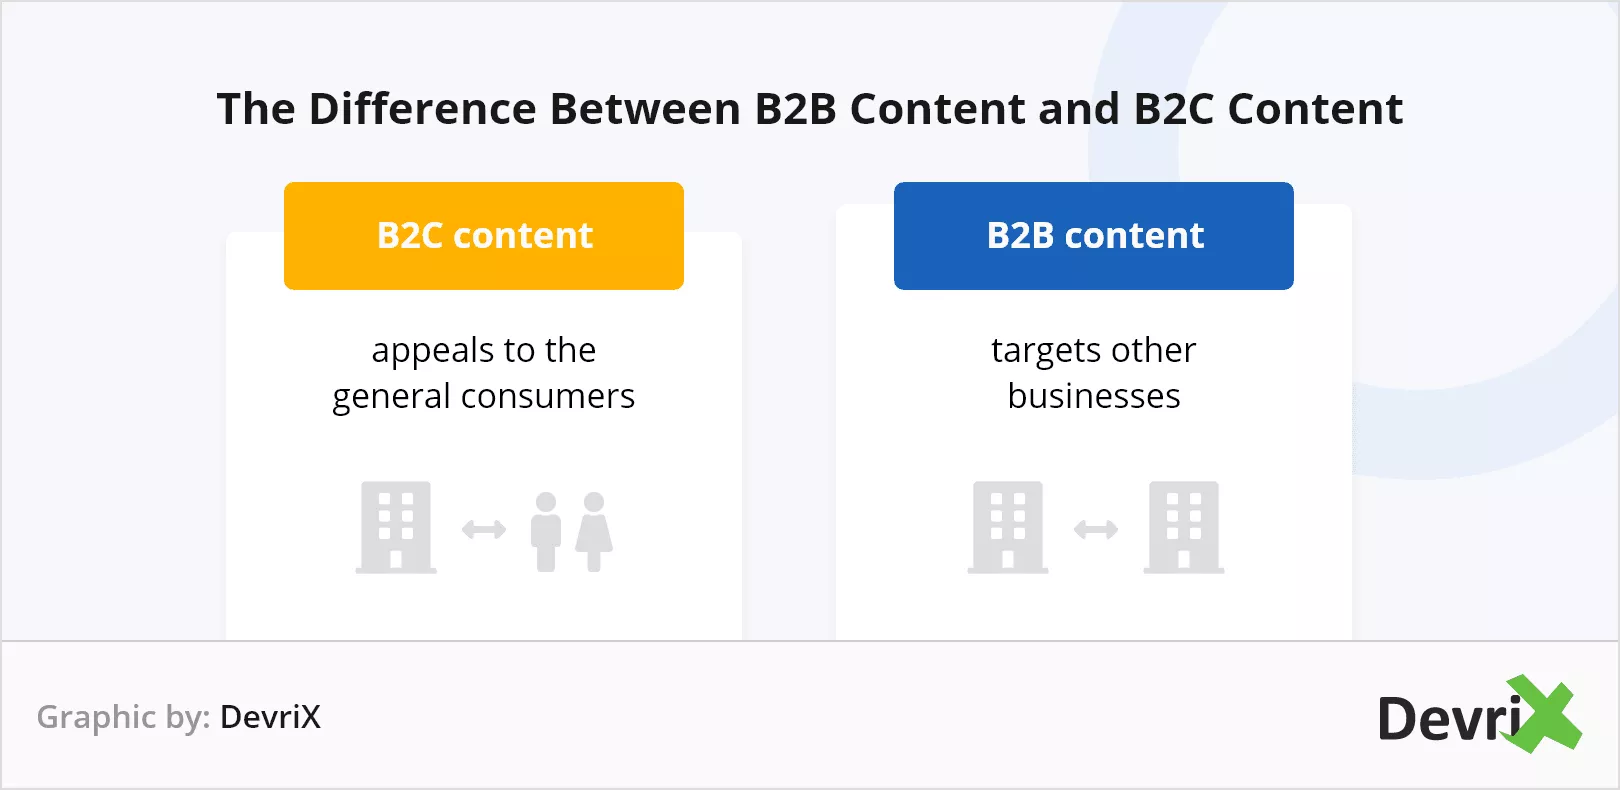 Qu'est-ce qui différencie le contenu B2B du contenu B2C?